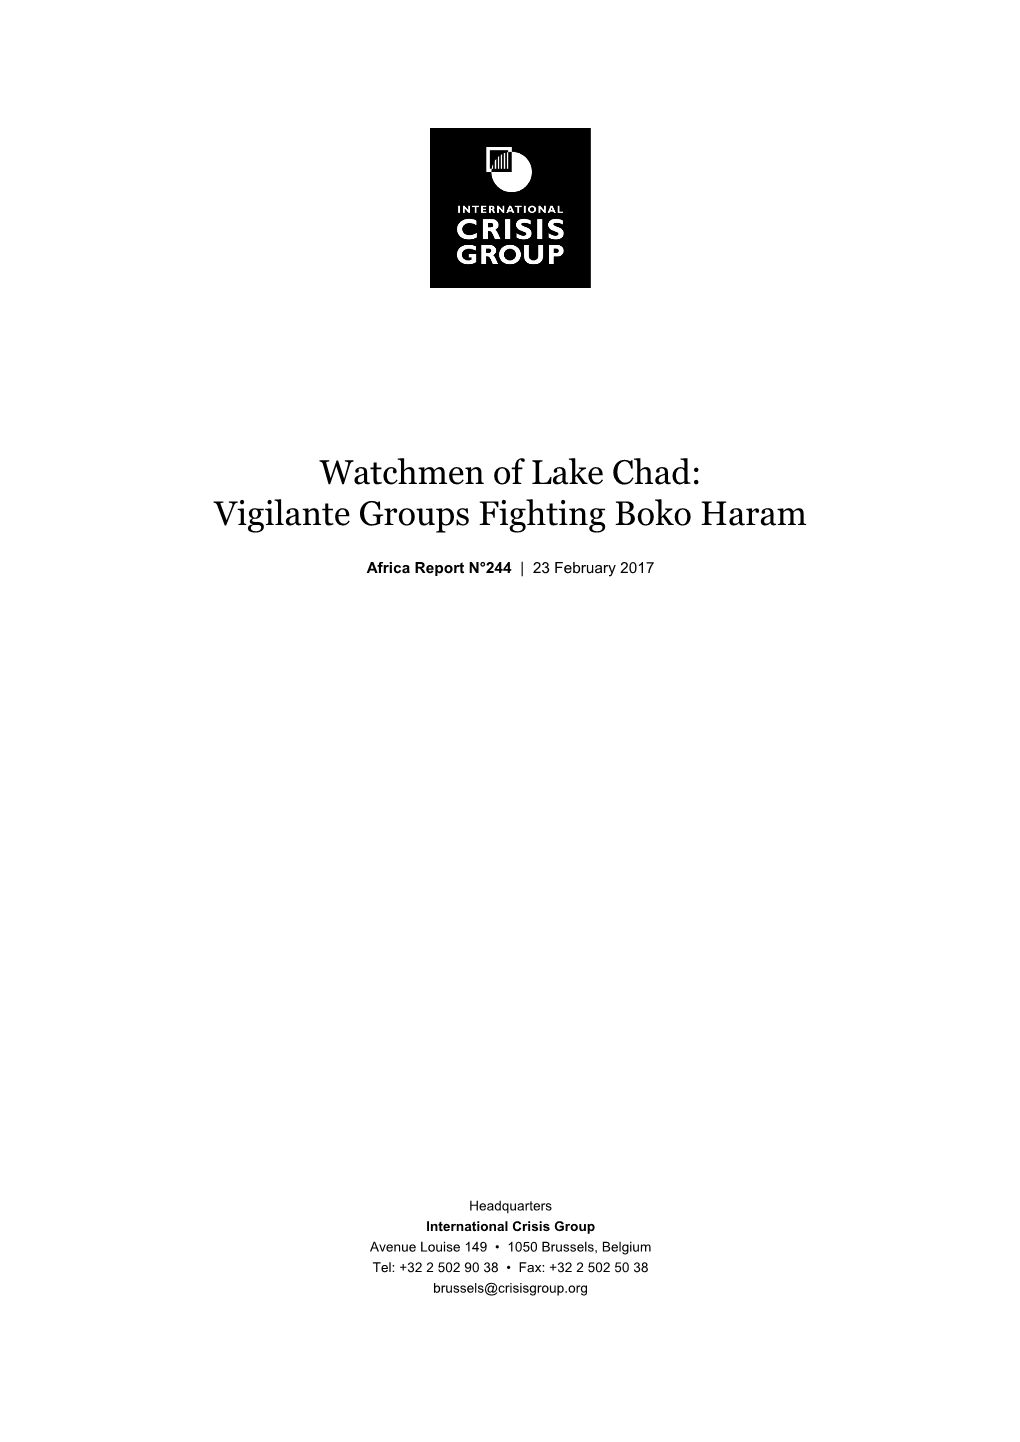 Watchmen of Lake Chad: Vigilante Groups Fighting Boko Haram